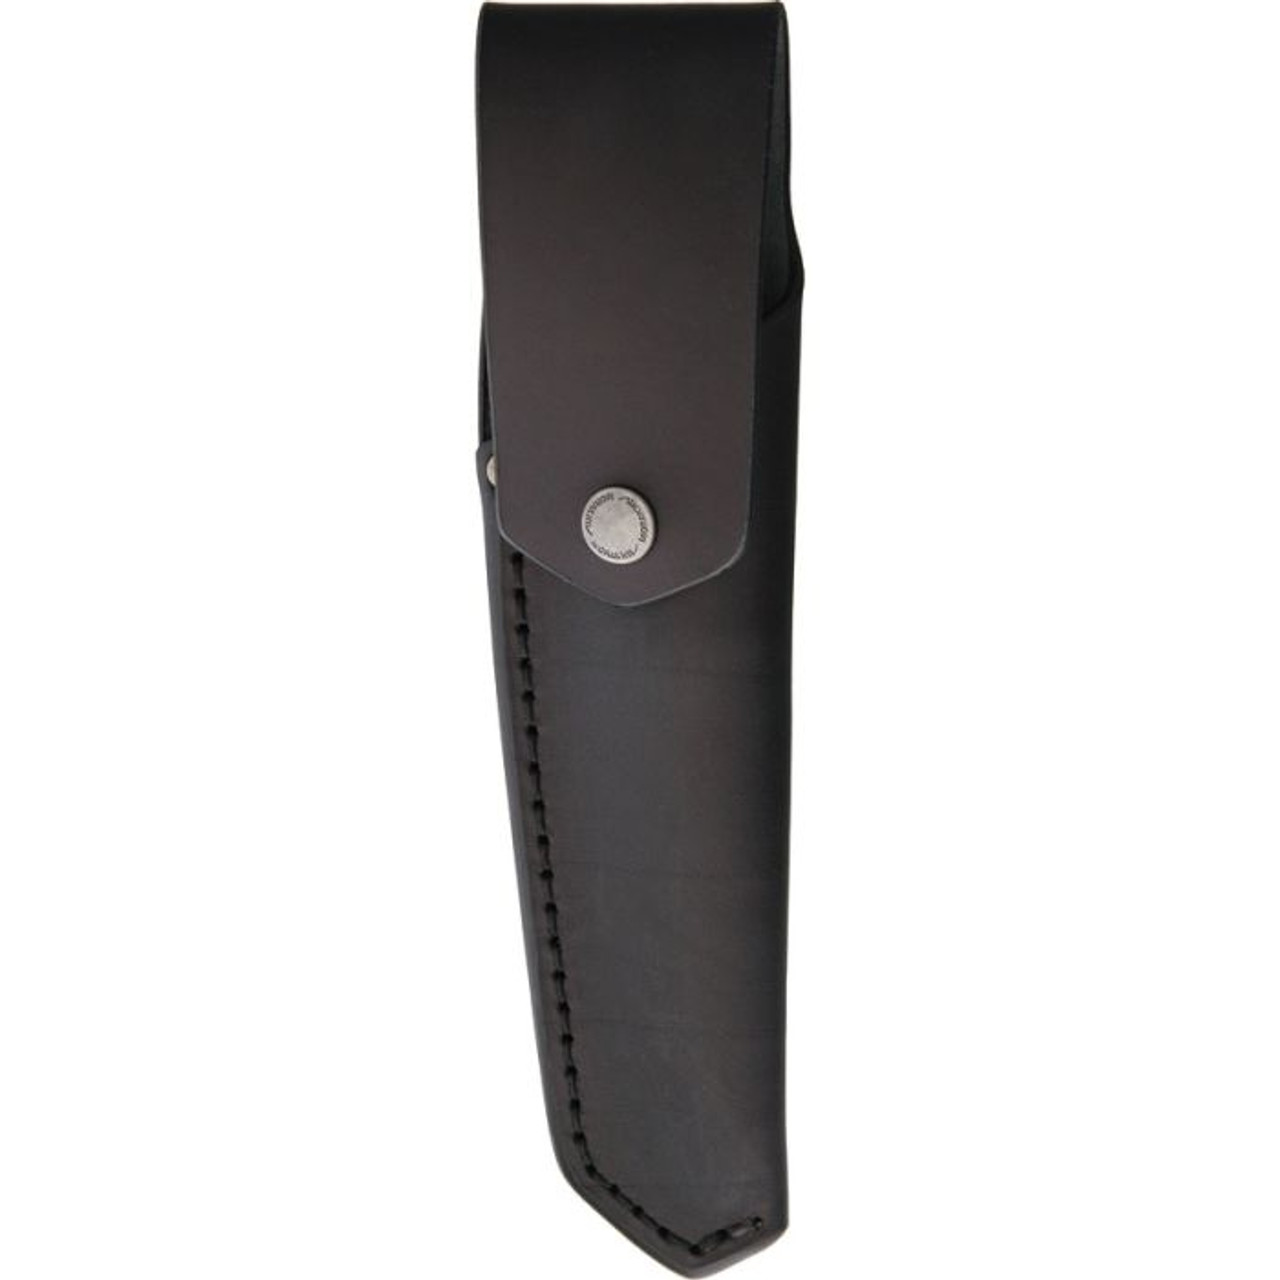 Mora Garberg (FT01747) 4.25" Sandvik 14C28N Satin Drop Point Plain Blade, Black Polymer Handle, Black Leather Belt Sheath